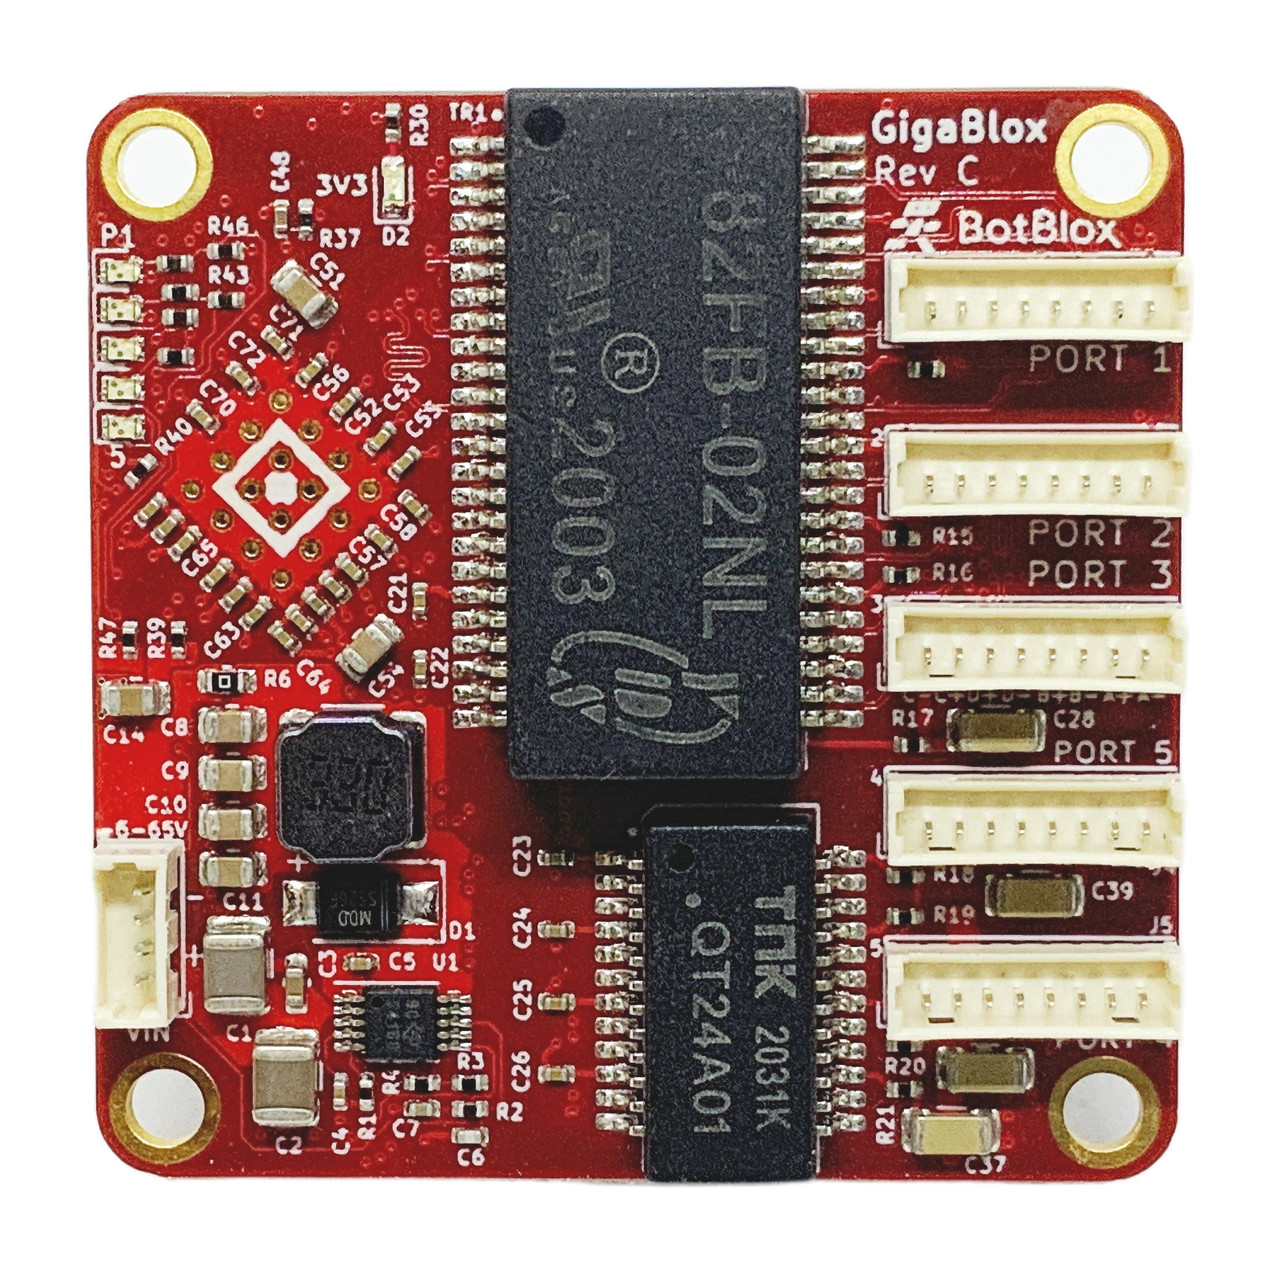 Bytecc BT-5550 Mini - switch - 5 ports - unmanaged - BT-5550 - Modular  Switches 